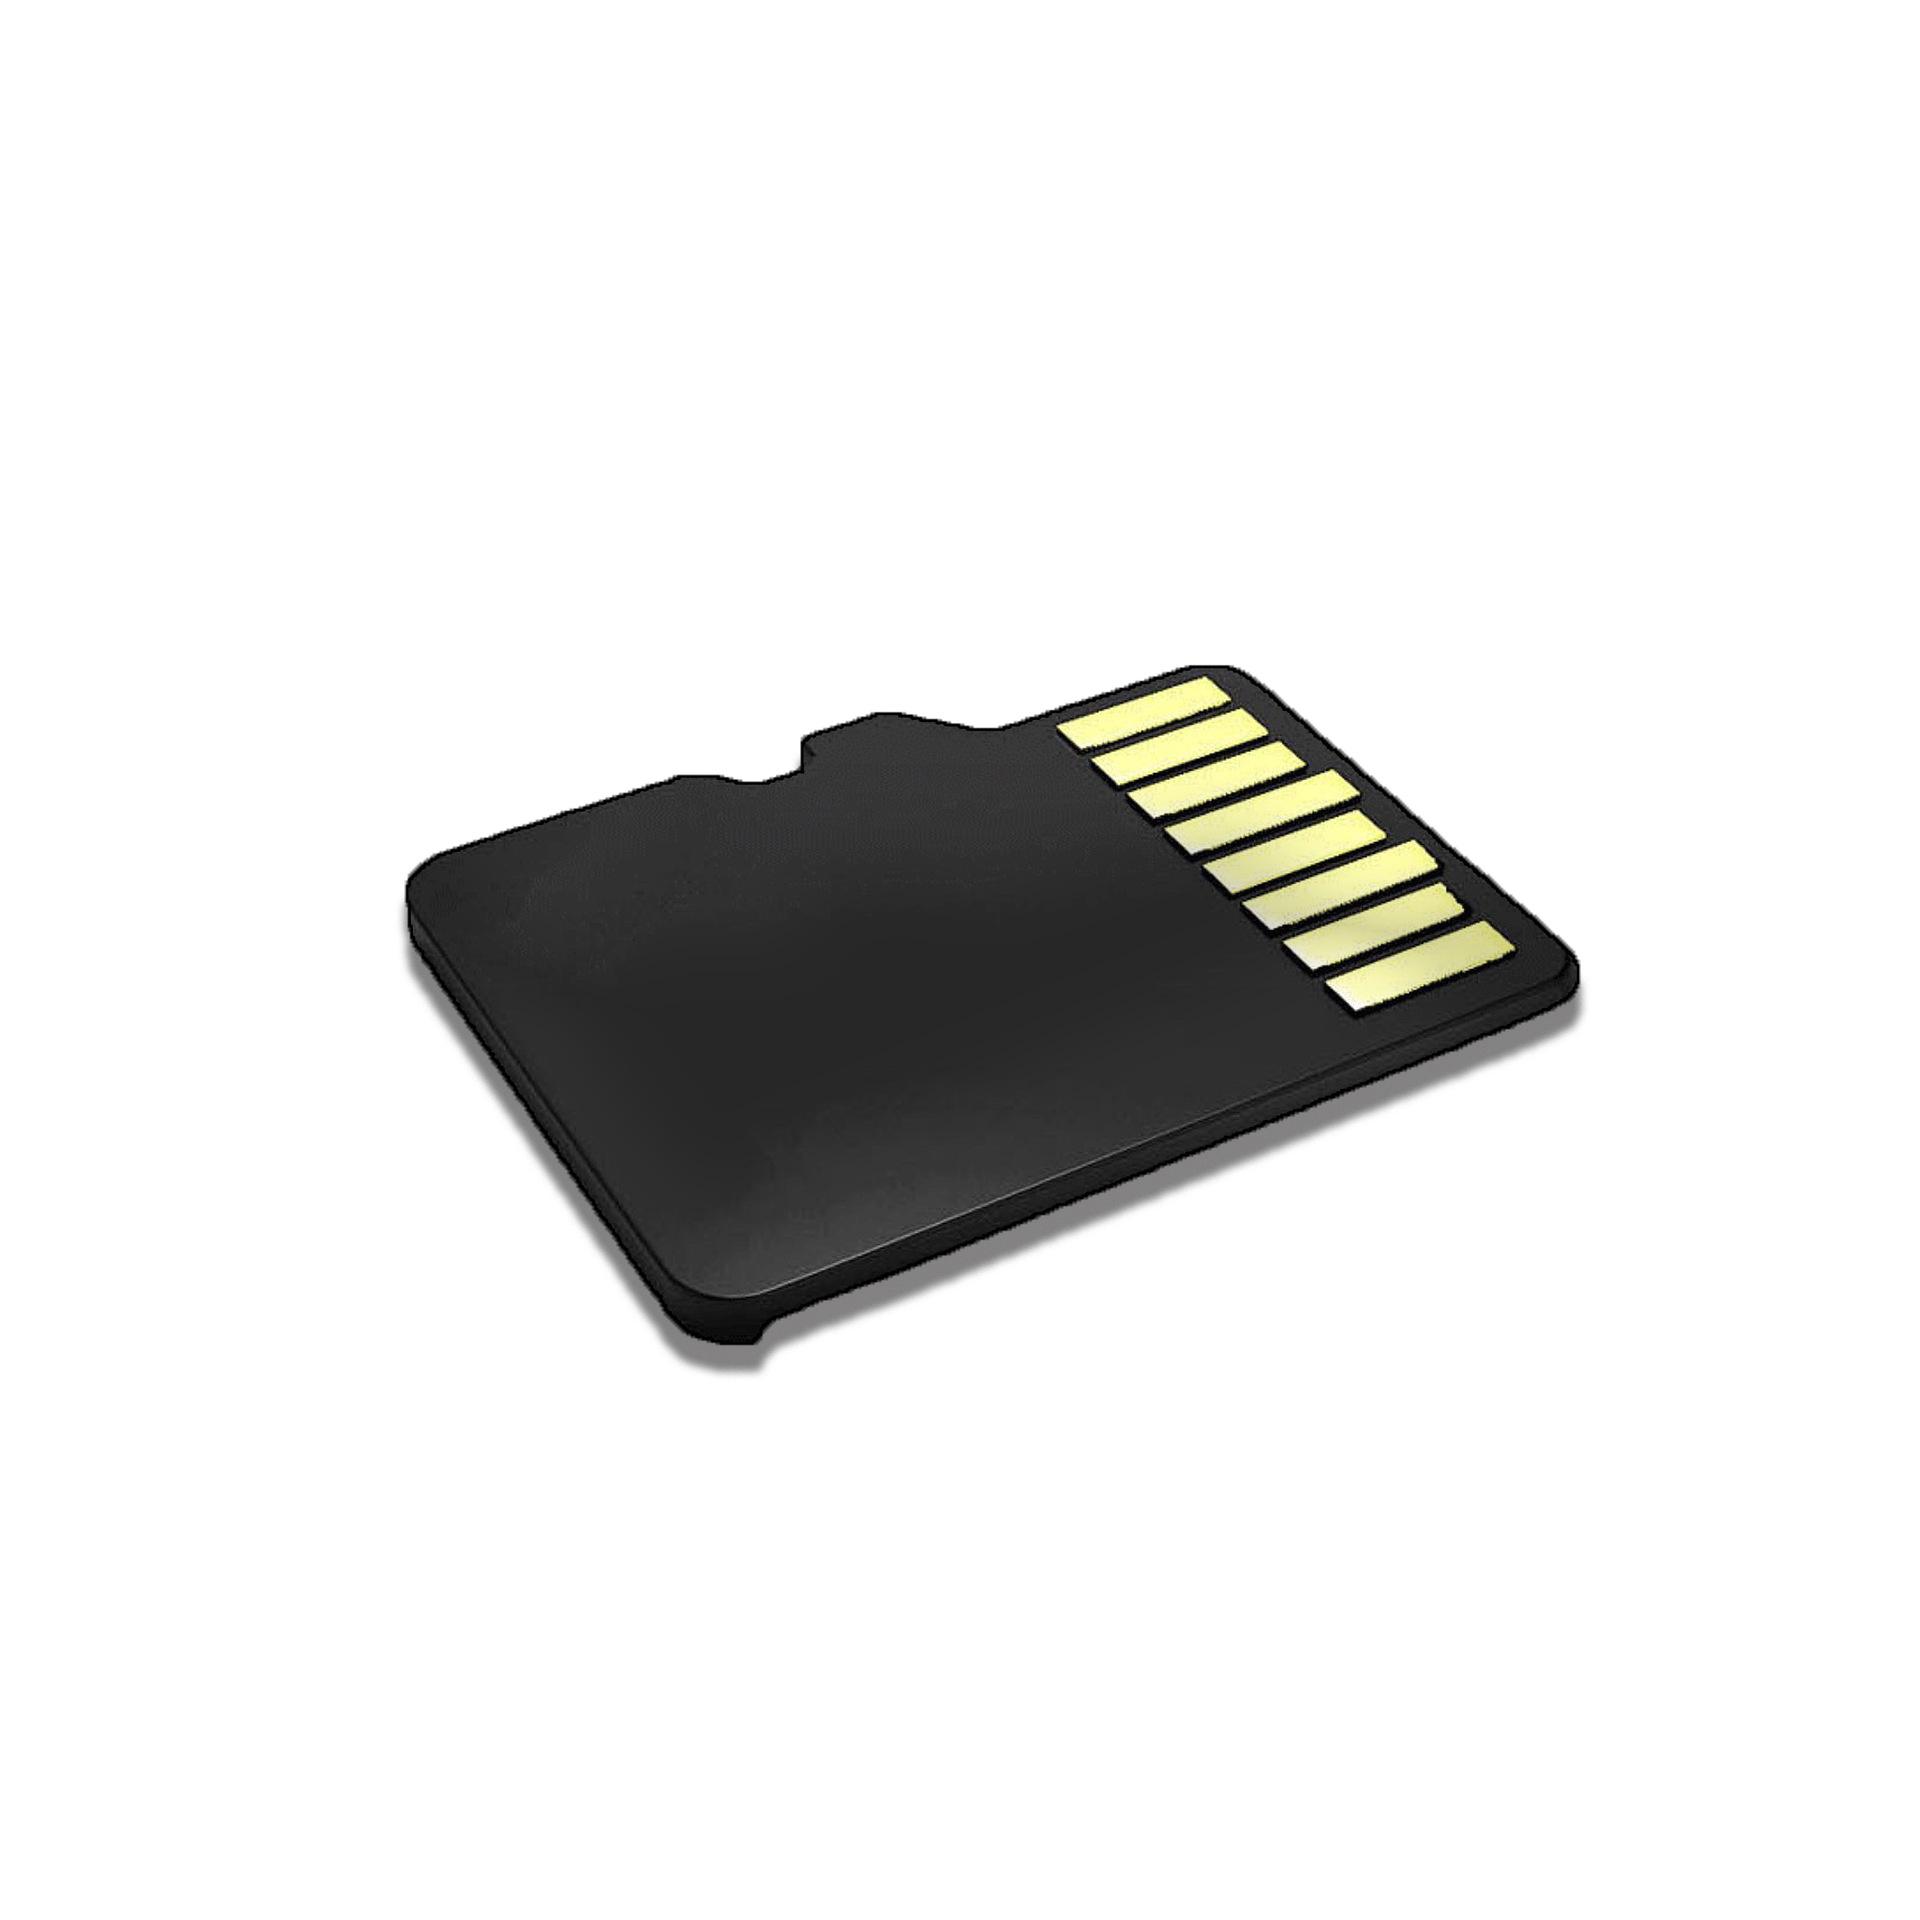 USB 2.0 Ultra Portable External DVD Writer Model SE-218CB/RSBS